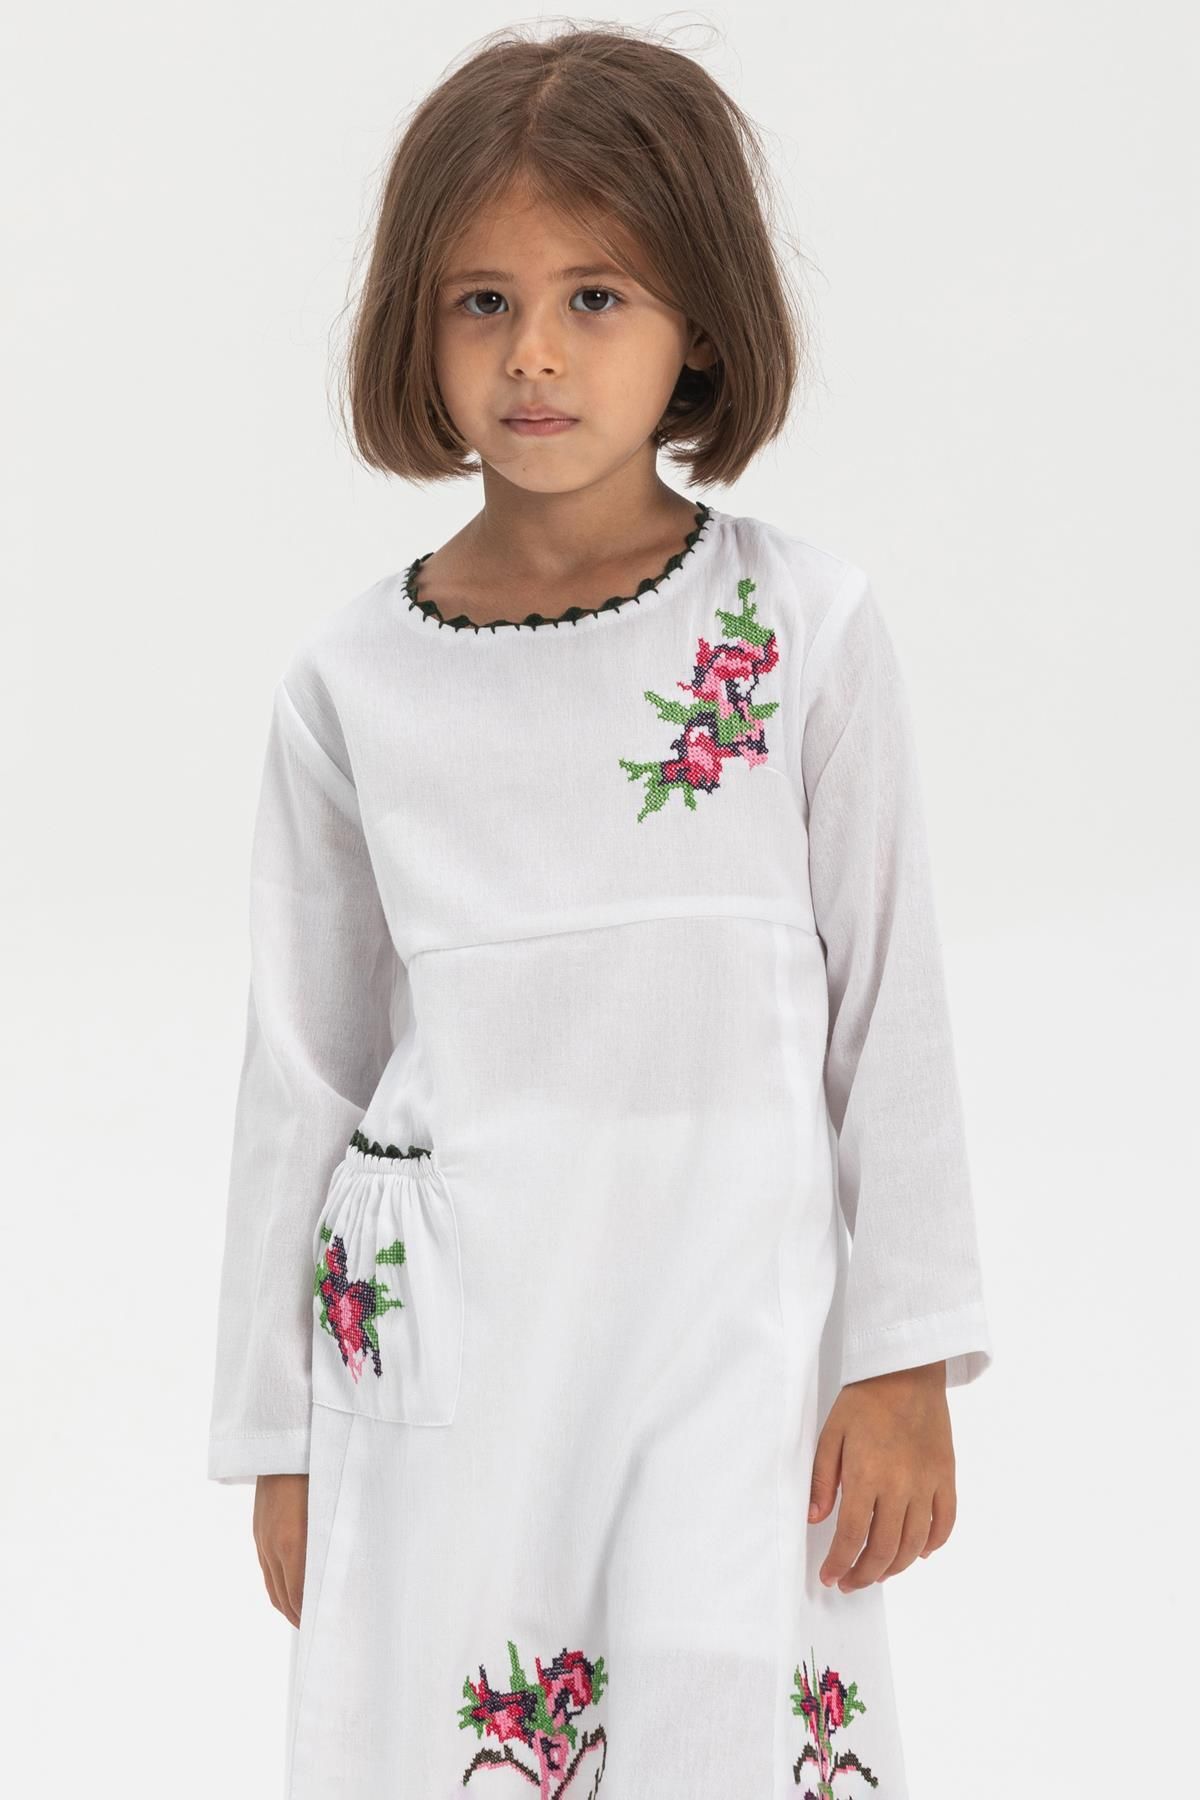 Eliş Şile Bezi لباس بچه گانه بورچاک پارچه ای شیله آستین بلند بیز سفید